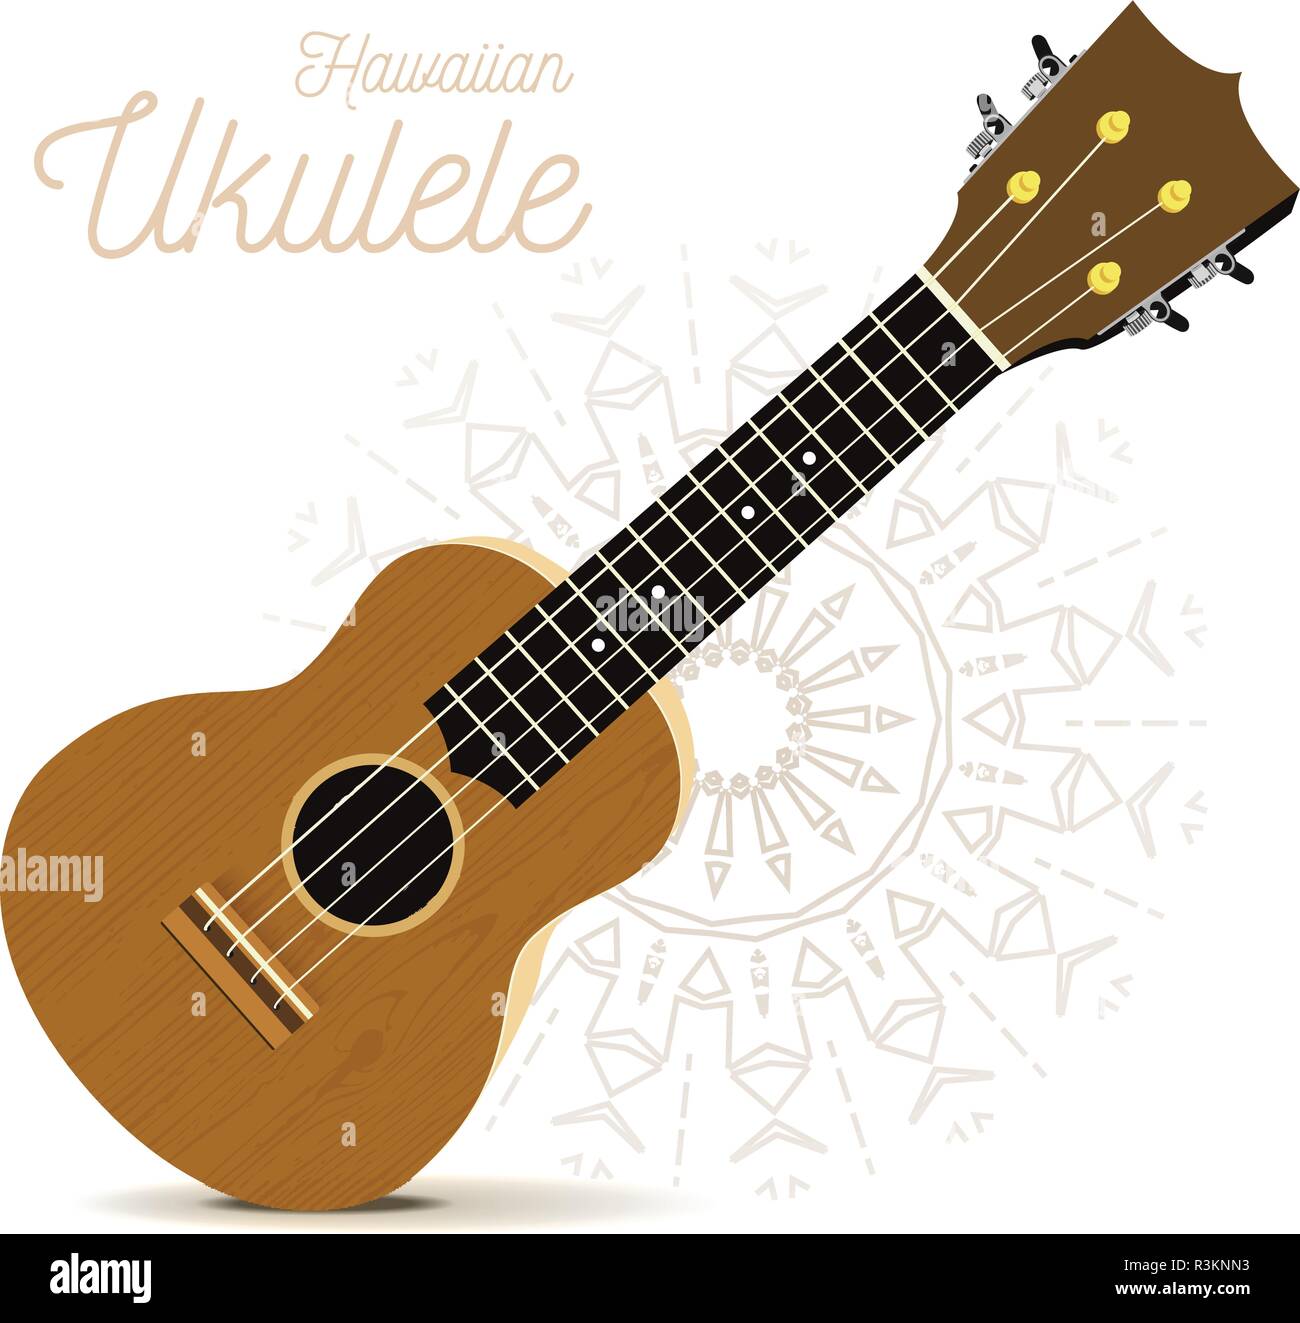 Ukulele - Hawaiian strumento musicale. Illustrazione Vettoriale su bianco Illustrazione Vettoriale